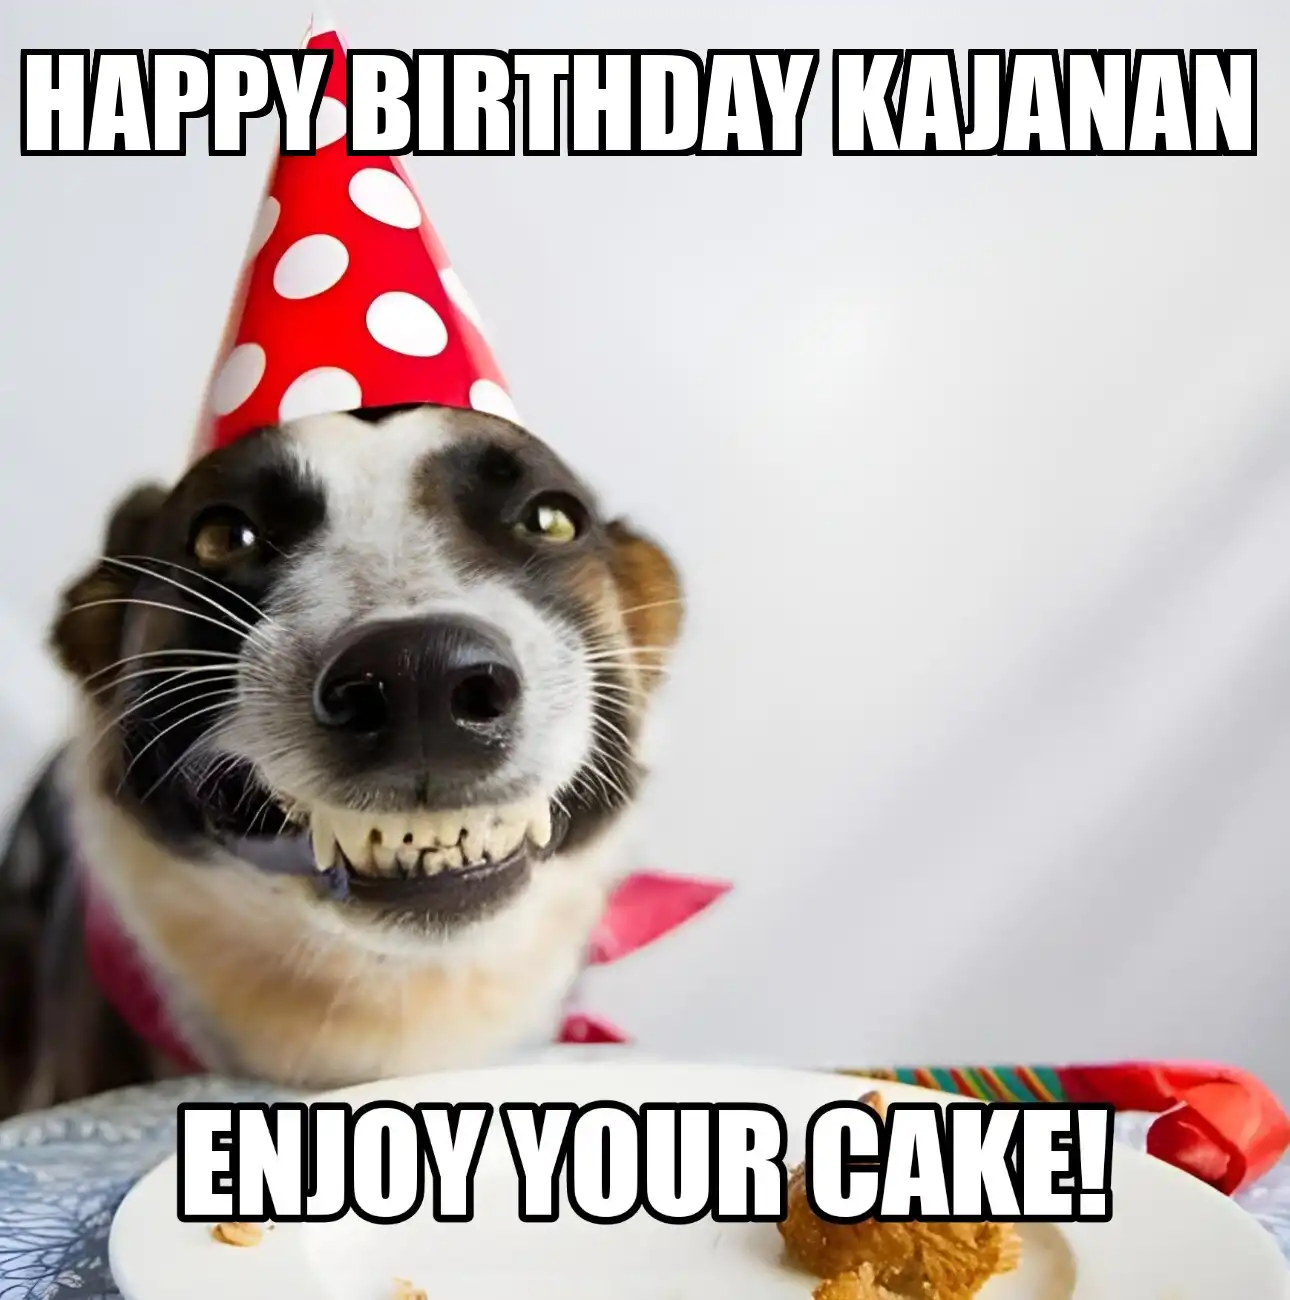 Happy Birthday Kajanan Enjoy Your Cake Dog Meme